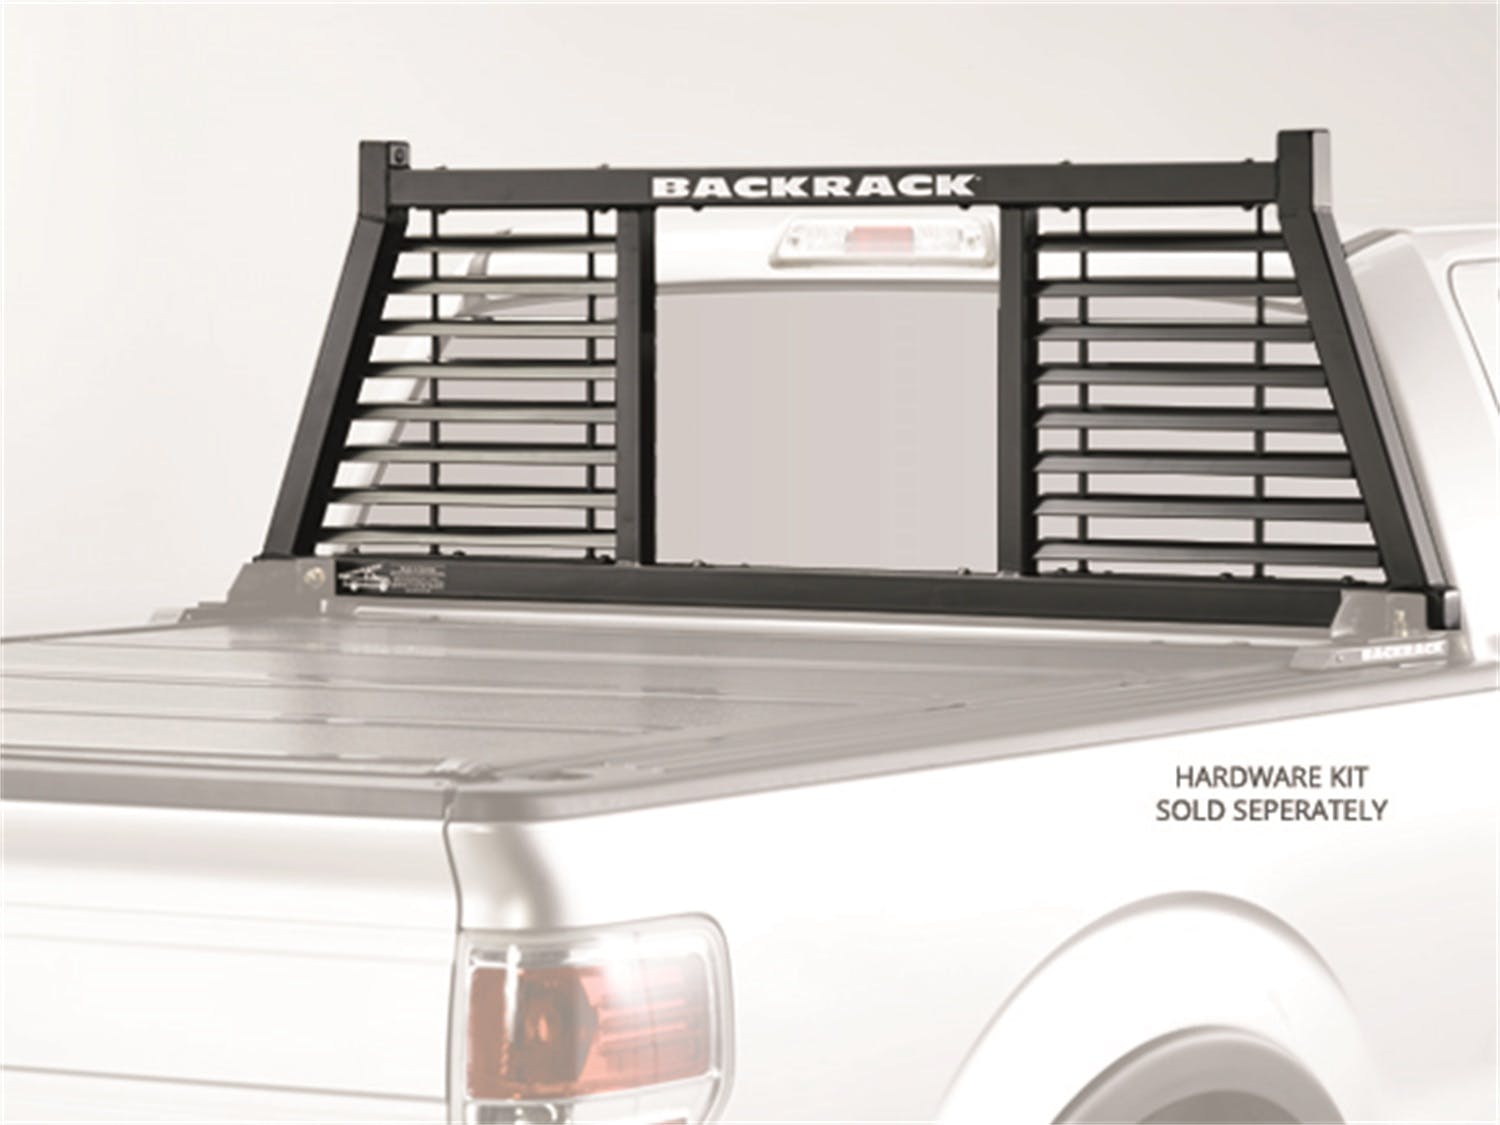 BACKRACK 147LV Frame Only, Hardware Kit Required - 30201, 30221